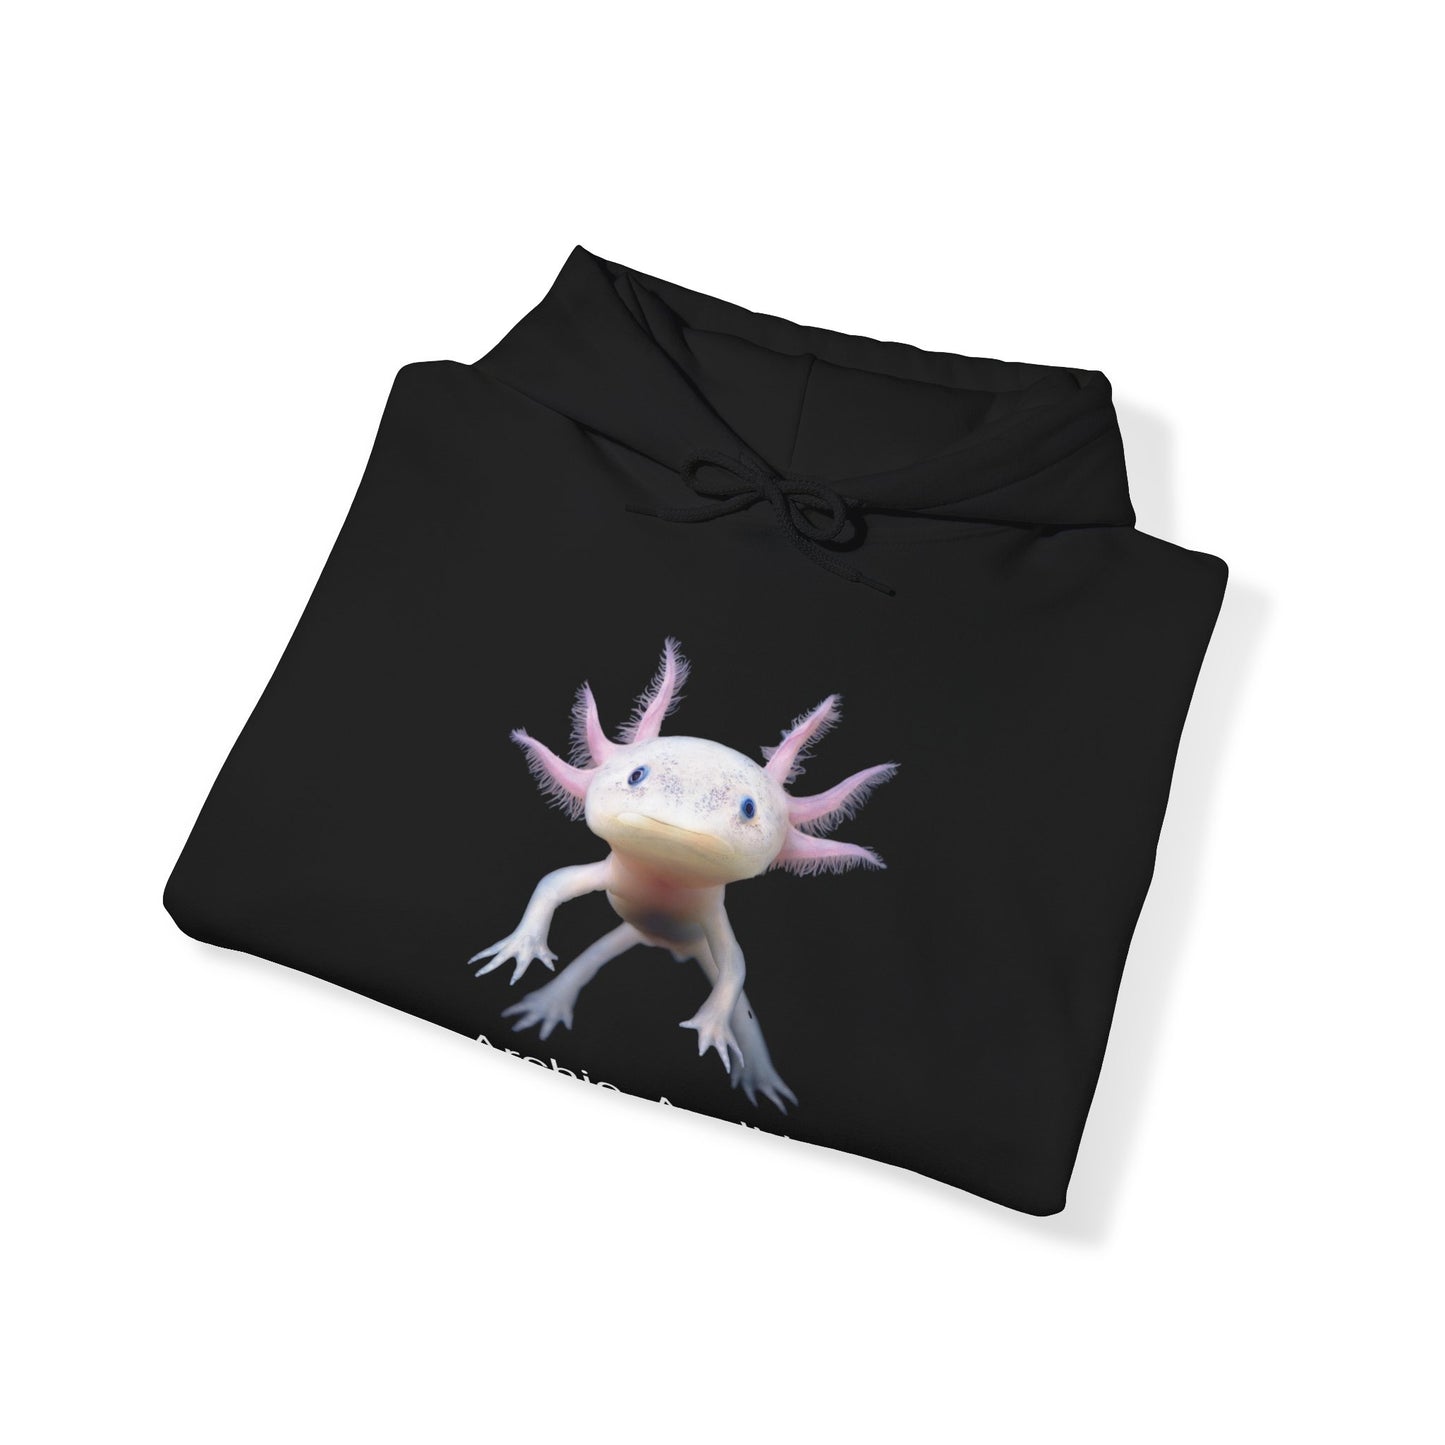 Hoodie, Archie the Axolotl Unisex Heavy Blend™ Hooded Sweatshirt